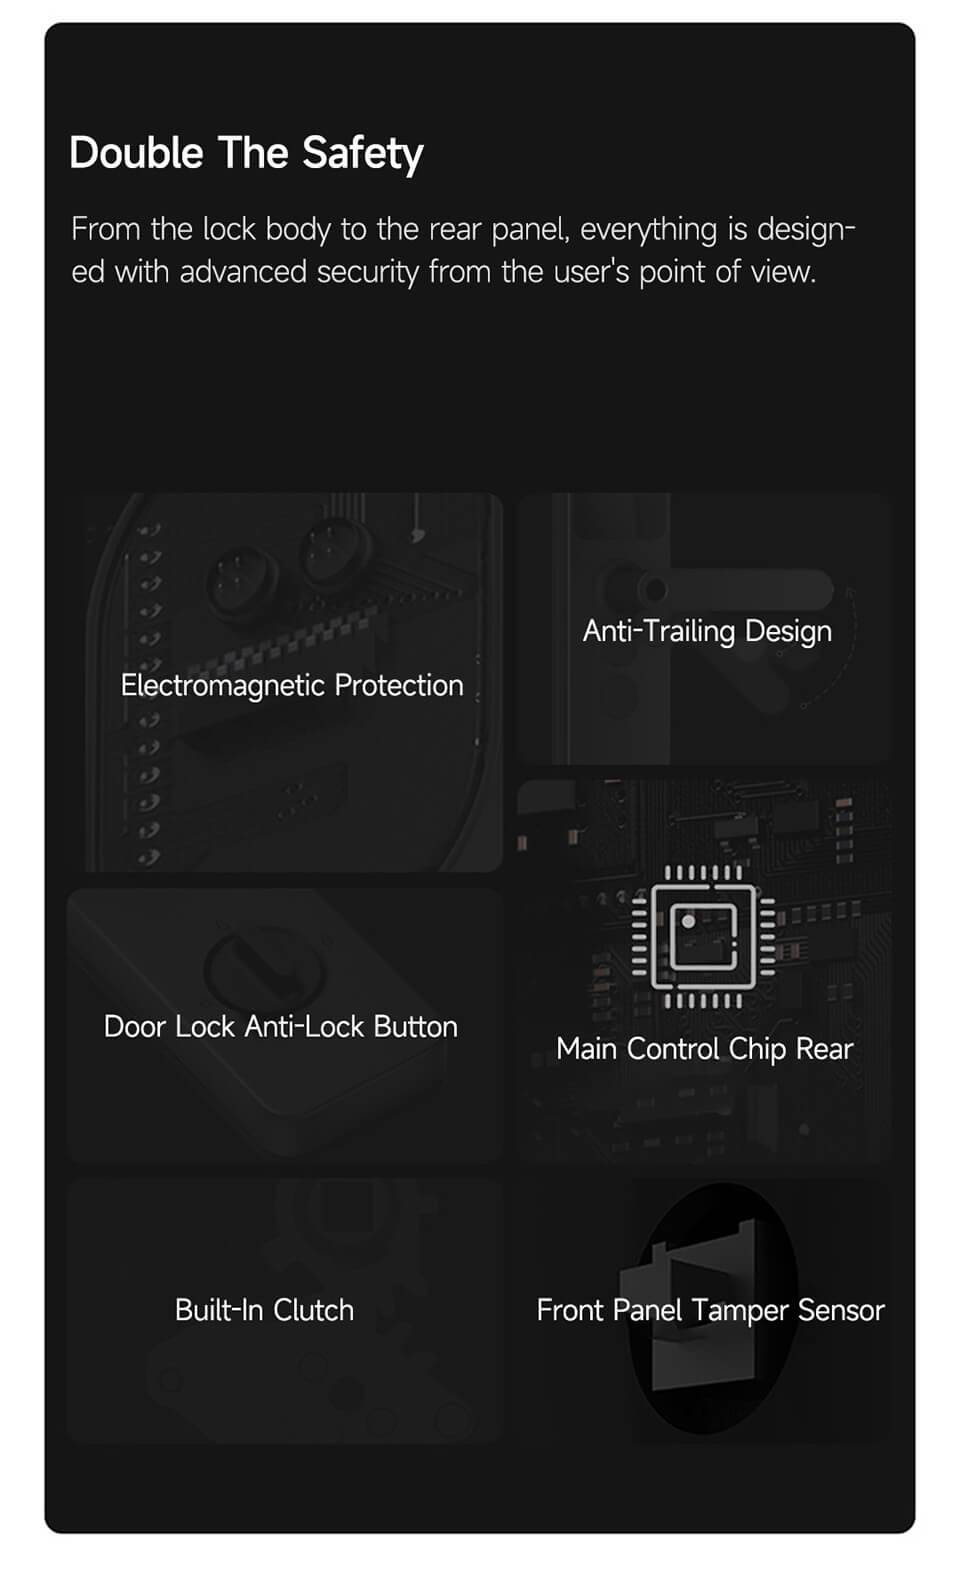 Aqara-cerradura de puerta inteligente A100 Pro Zigbee, Bluetooth 5,0, Apple Home Key, huella dactilar, desbloqueo de contraseña, funciona con Homekit, Aqara Home Siri